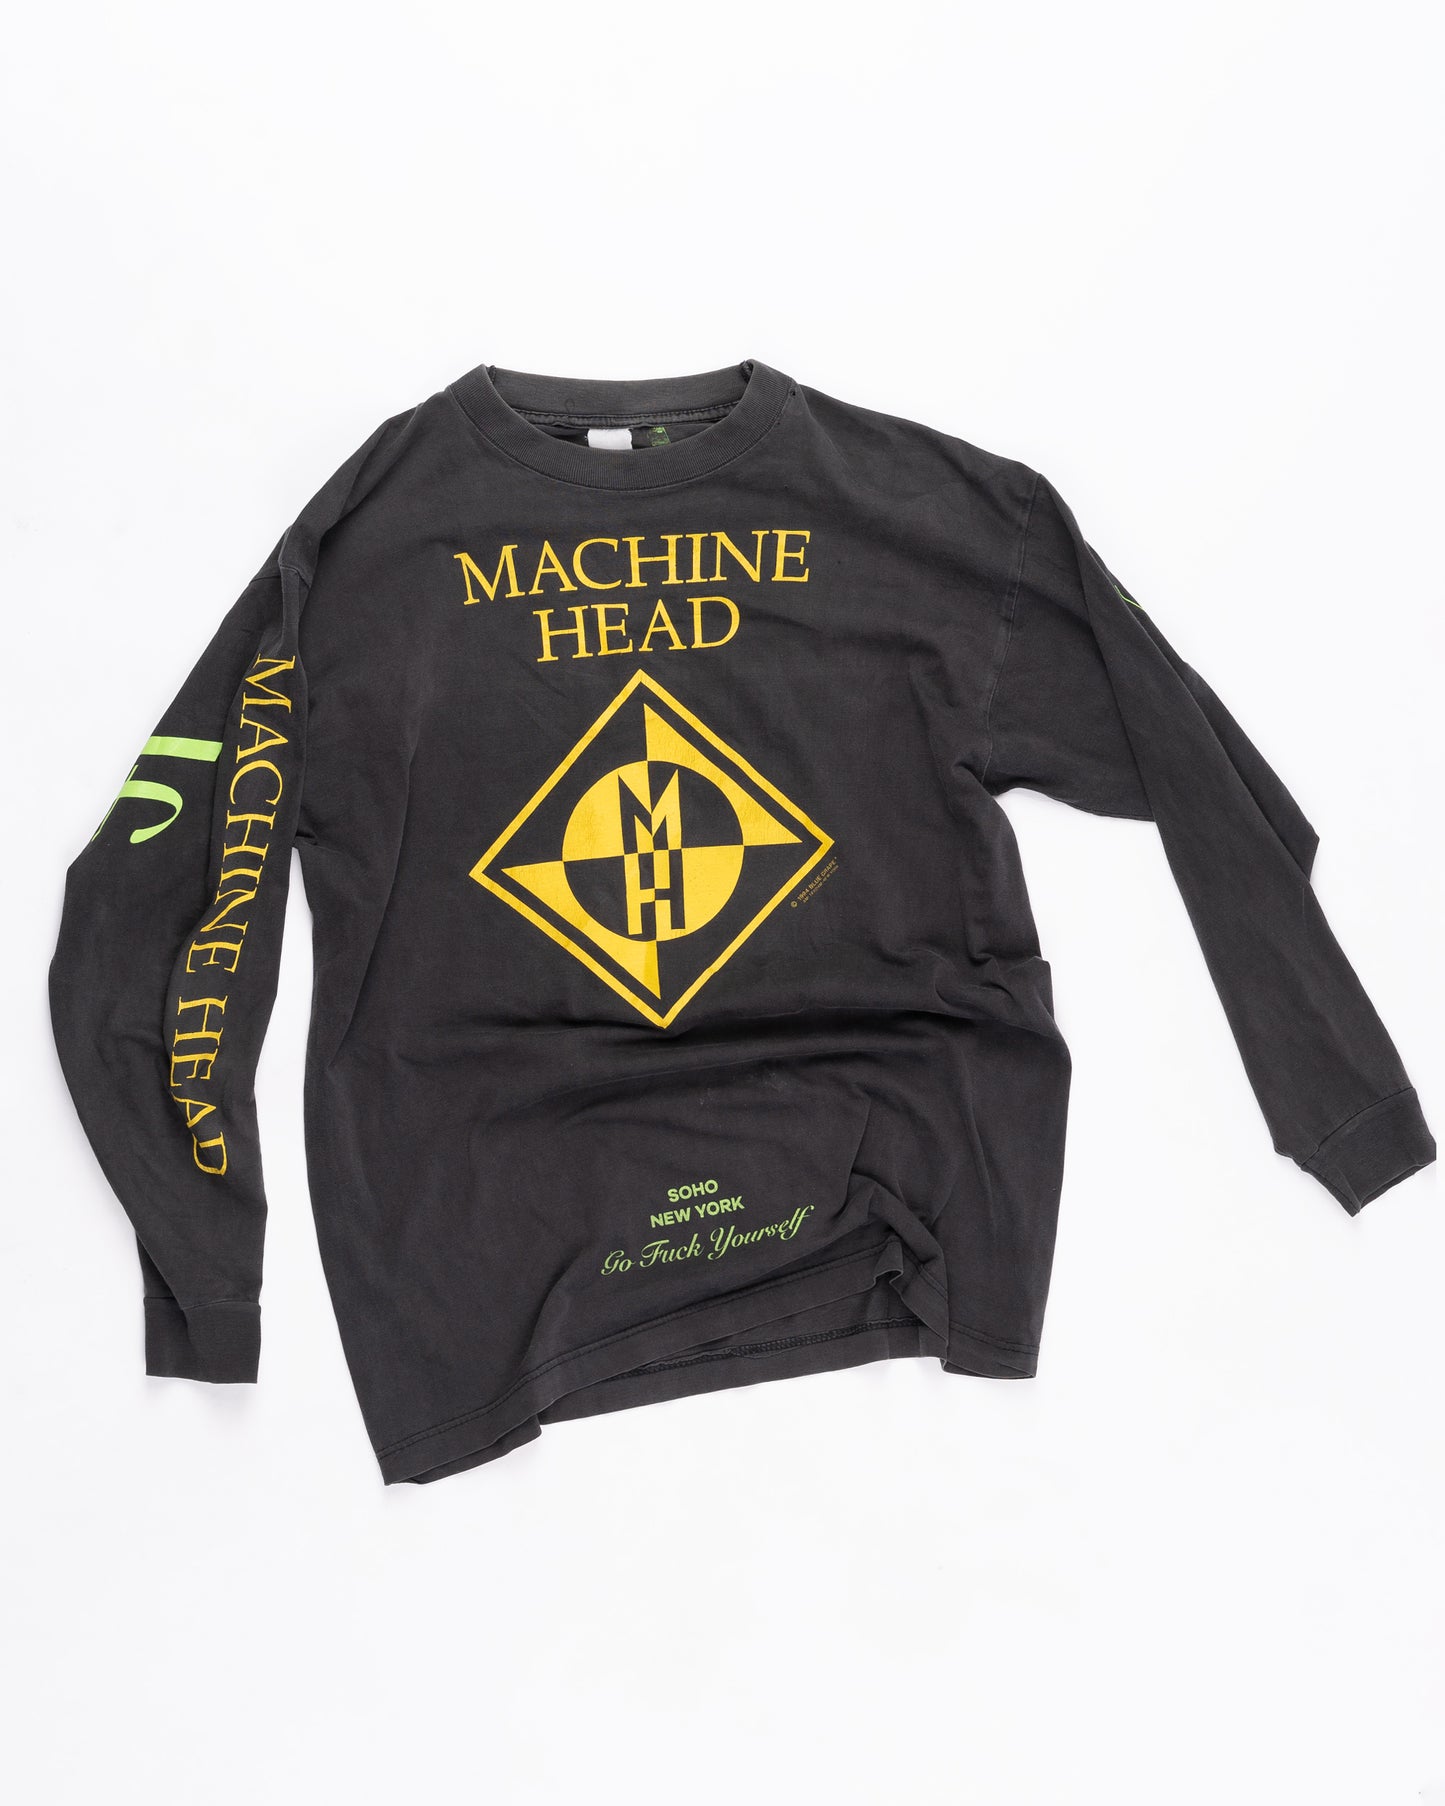 Machine Head Long Sleeve Size: Large